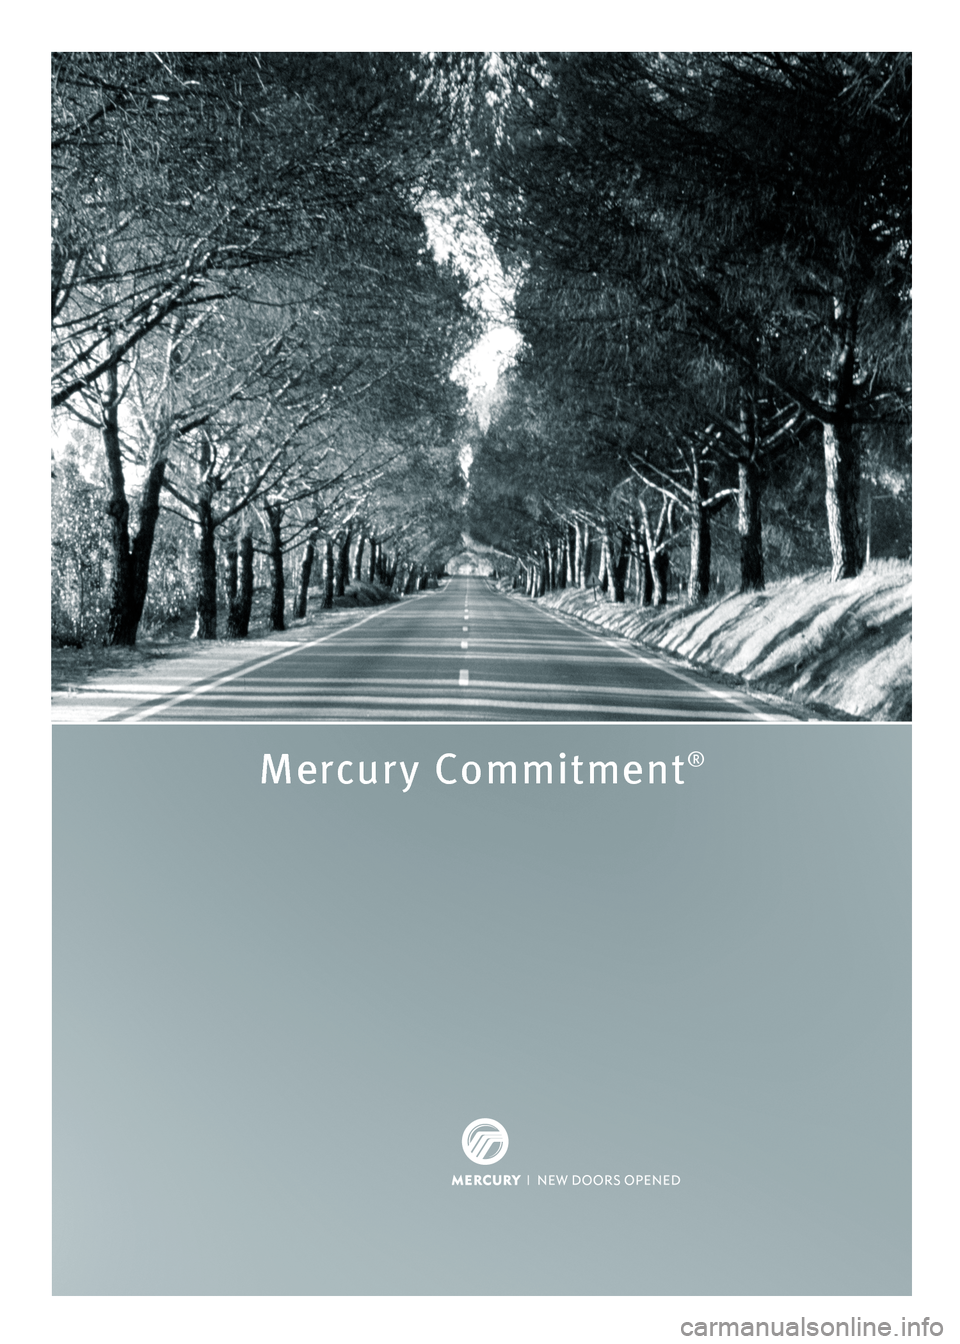 Mercury Mountaineer 2008  Customer Assistance Guide Roadside Assistance
Mercury Commitment®
800 241-3673
Roadside Assistance
Mercury Commitment®
800 241-3673
8W3J 19328 AA 
April 2007 
First Printing
Mercury Commitment  Litho in U.S.A.
*8W3J_19328_AA